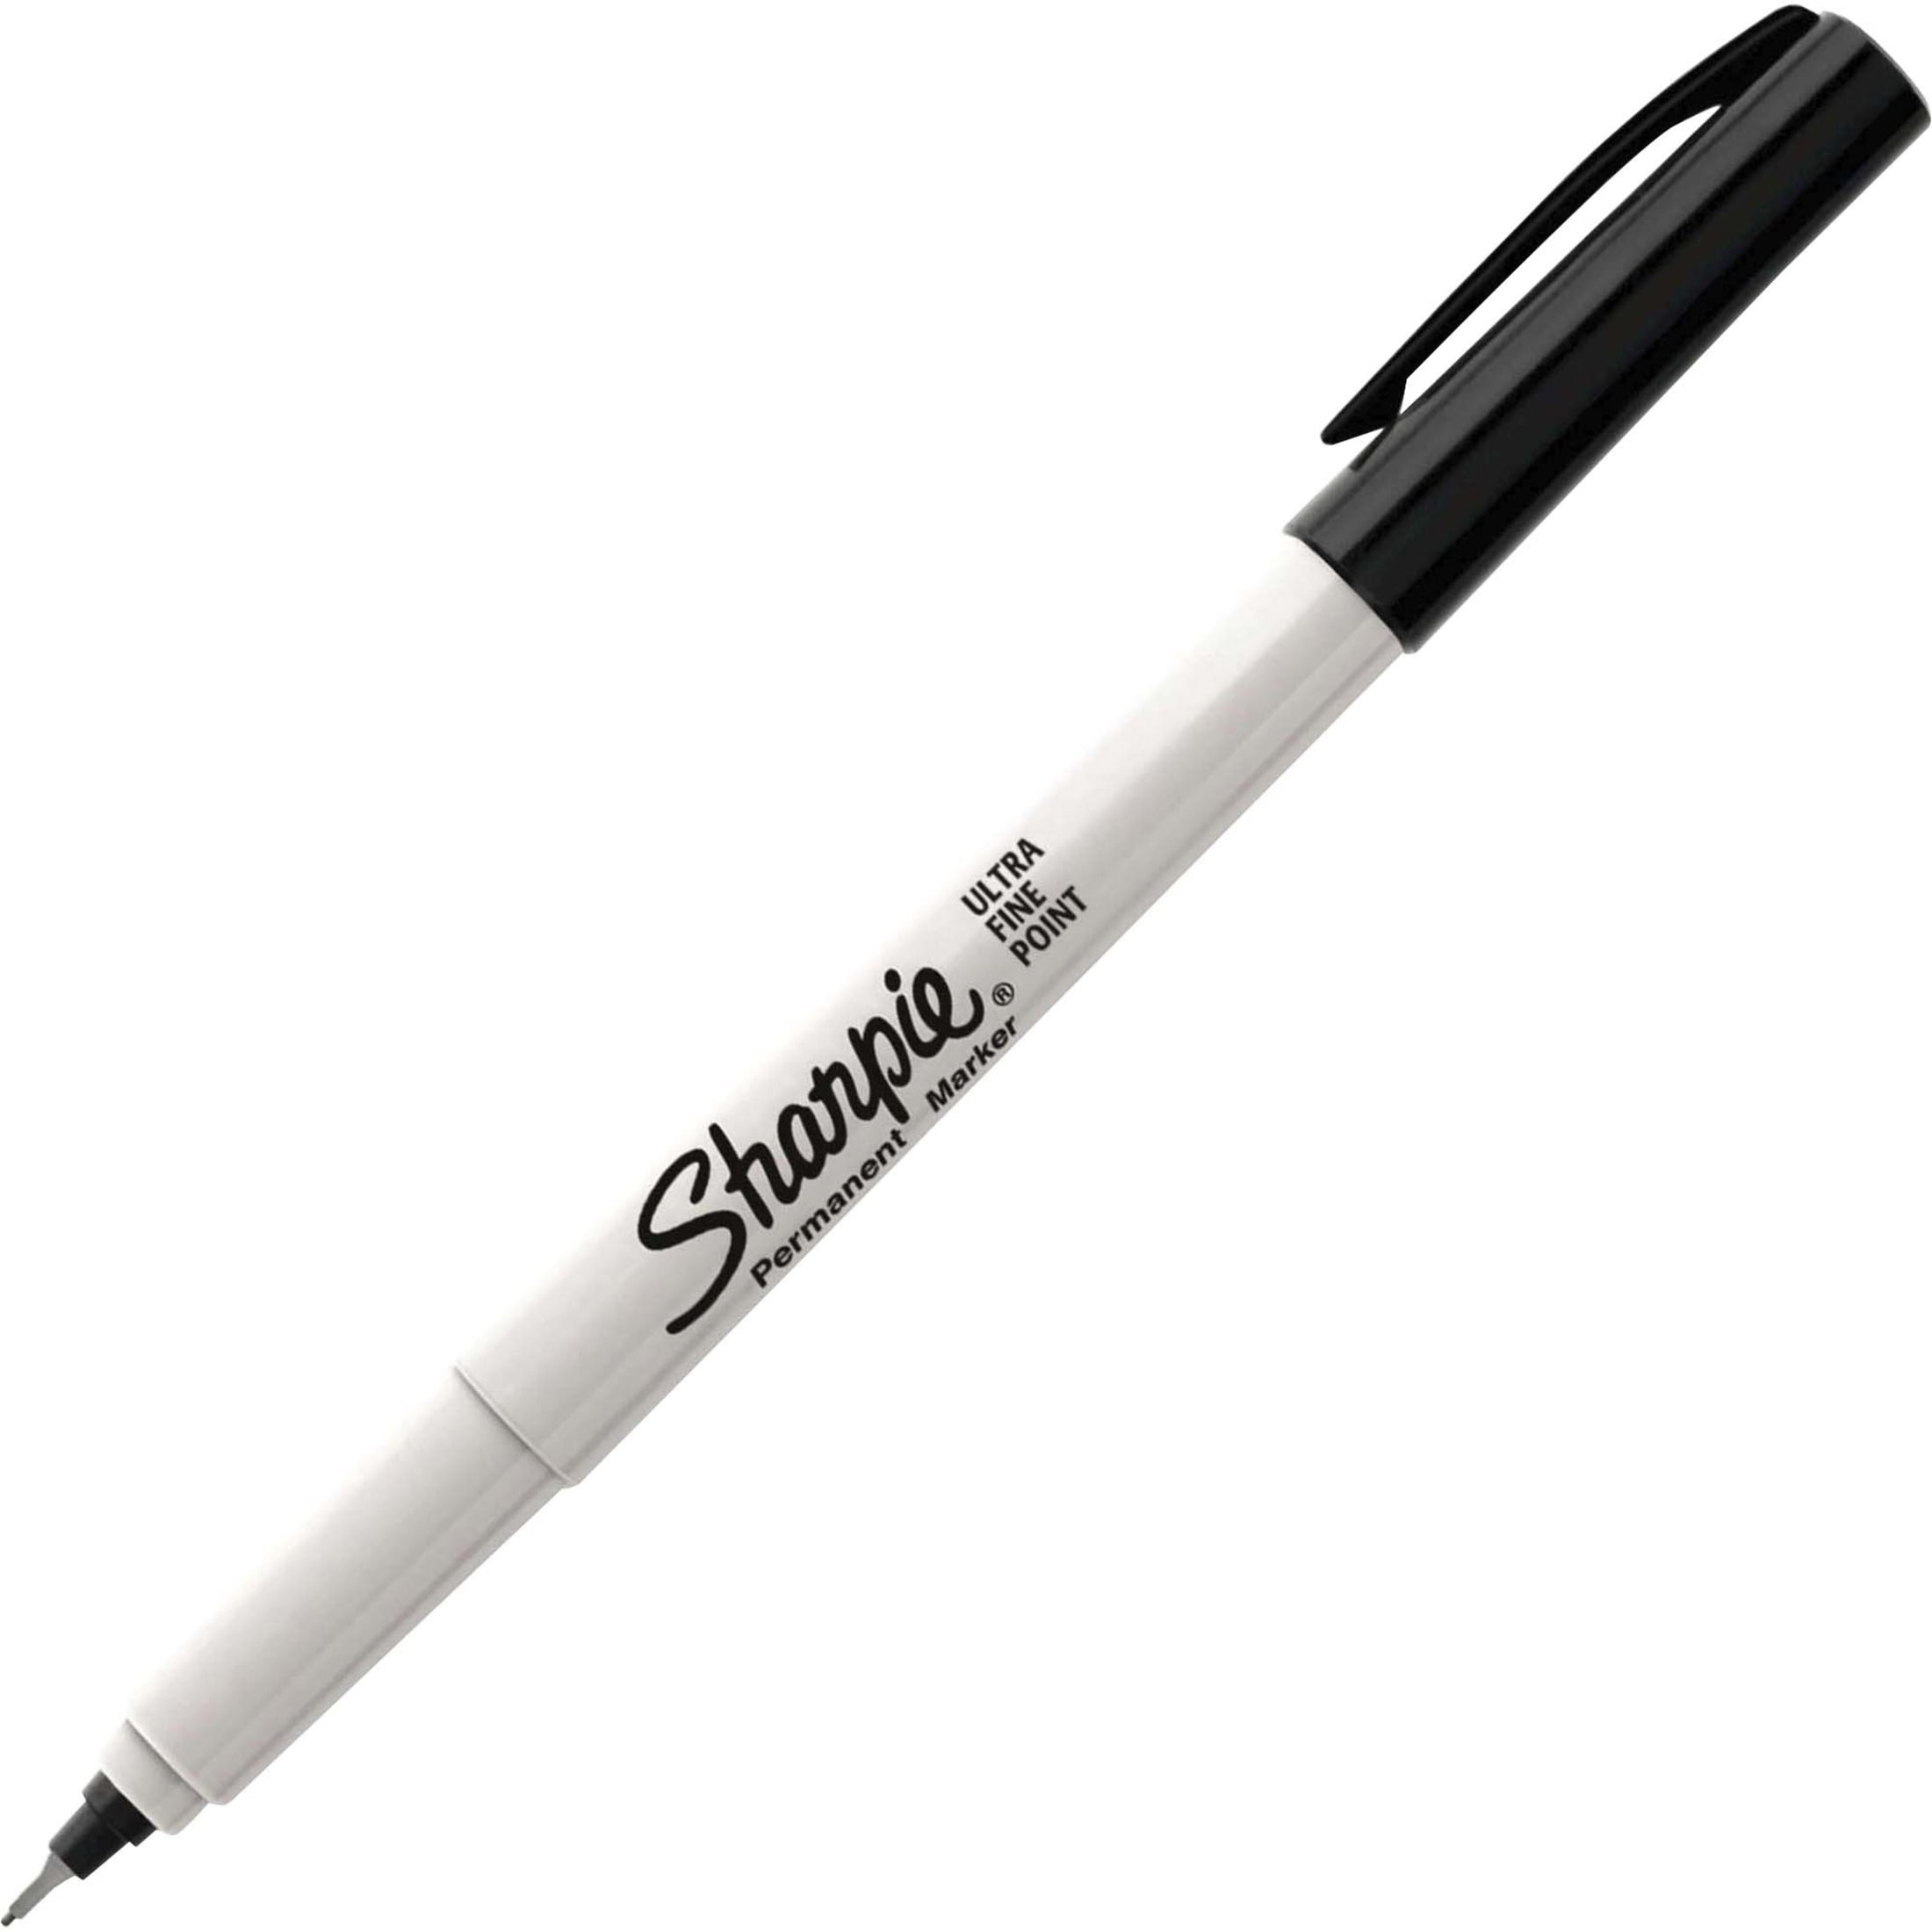 Laundry Marker Pen RubaDub Rub-a-Dub Sharpie - Fine Point, permanent, black  - quantity: 1 Pen